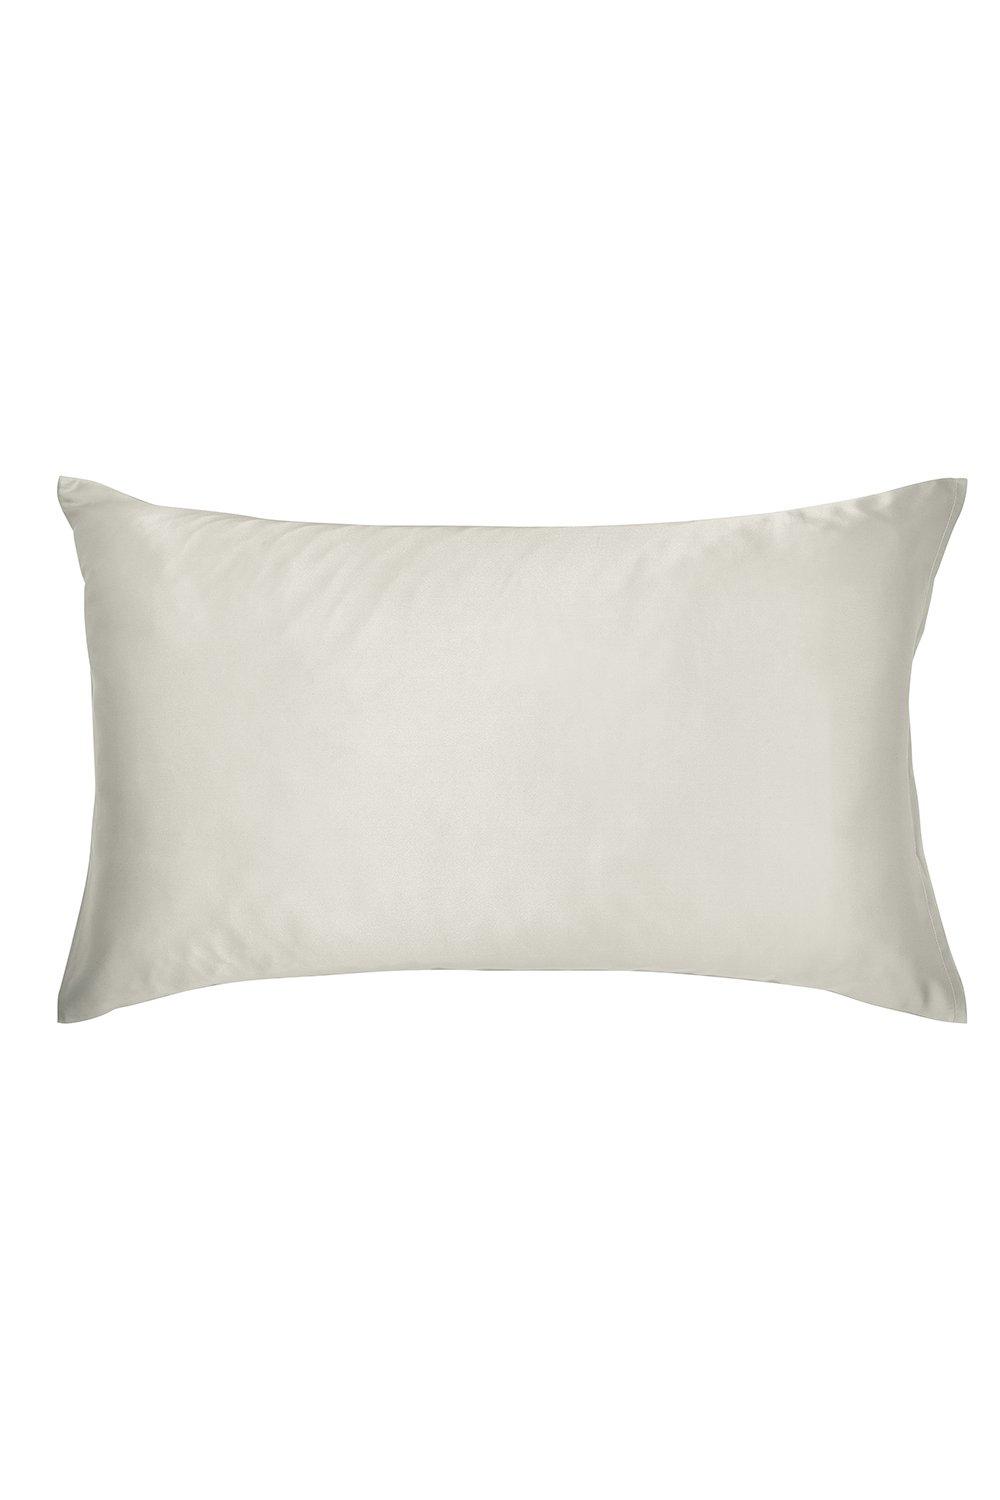 Morris & Co Silk' Standard Pillowcase